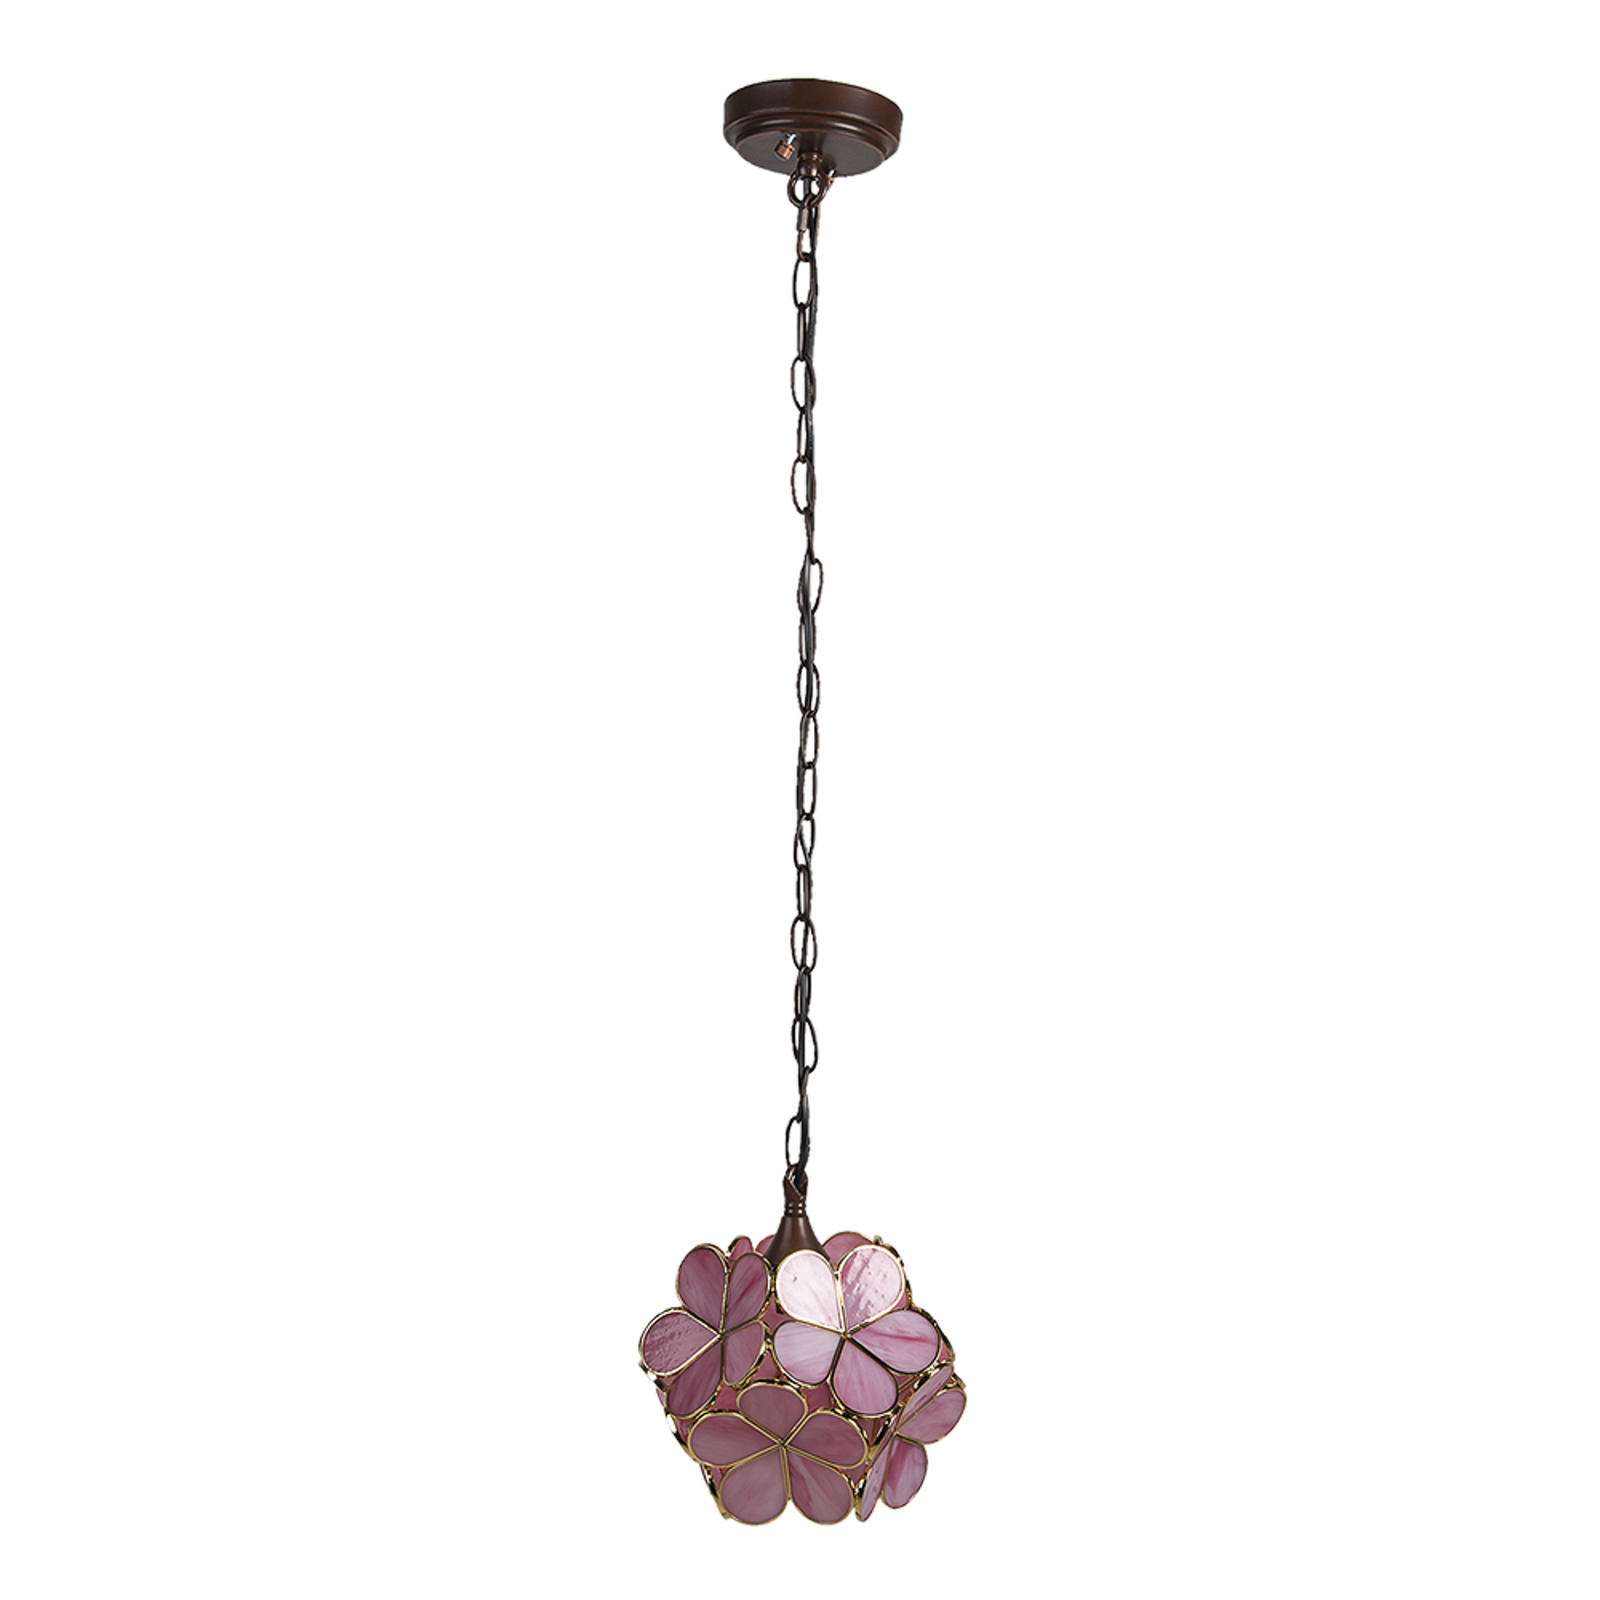 Hanglamp 5LL-6093 in Tiffany stijl, roze